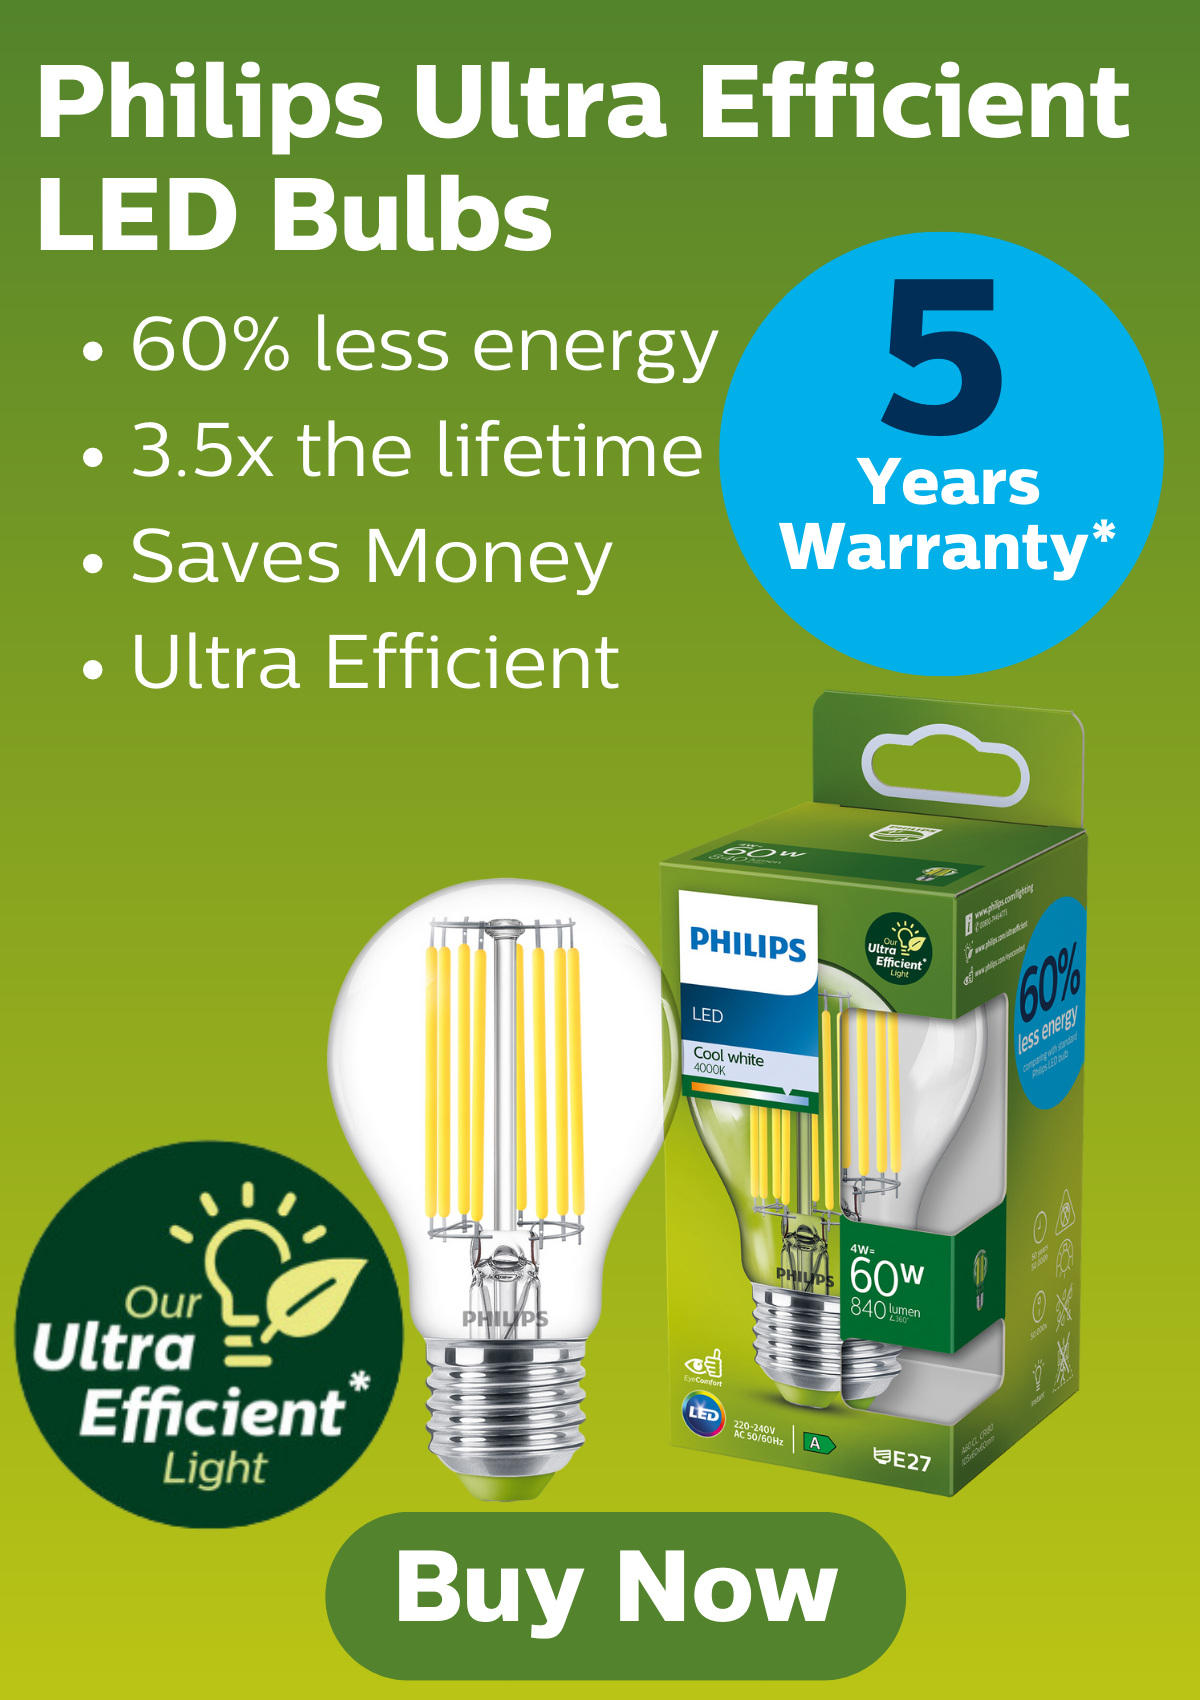 Philips Ultra Efficient lighting